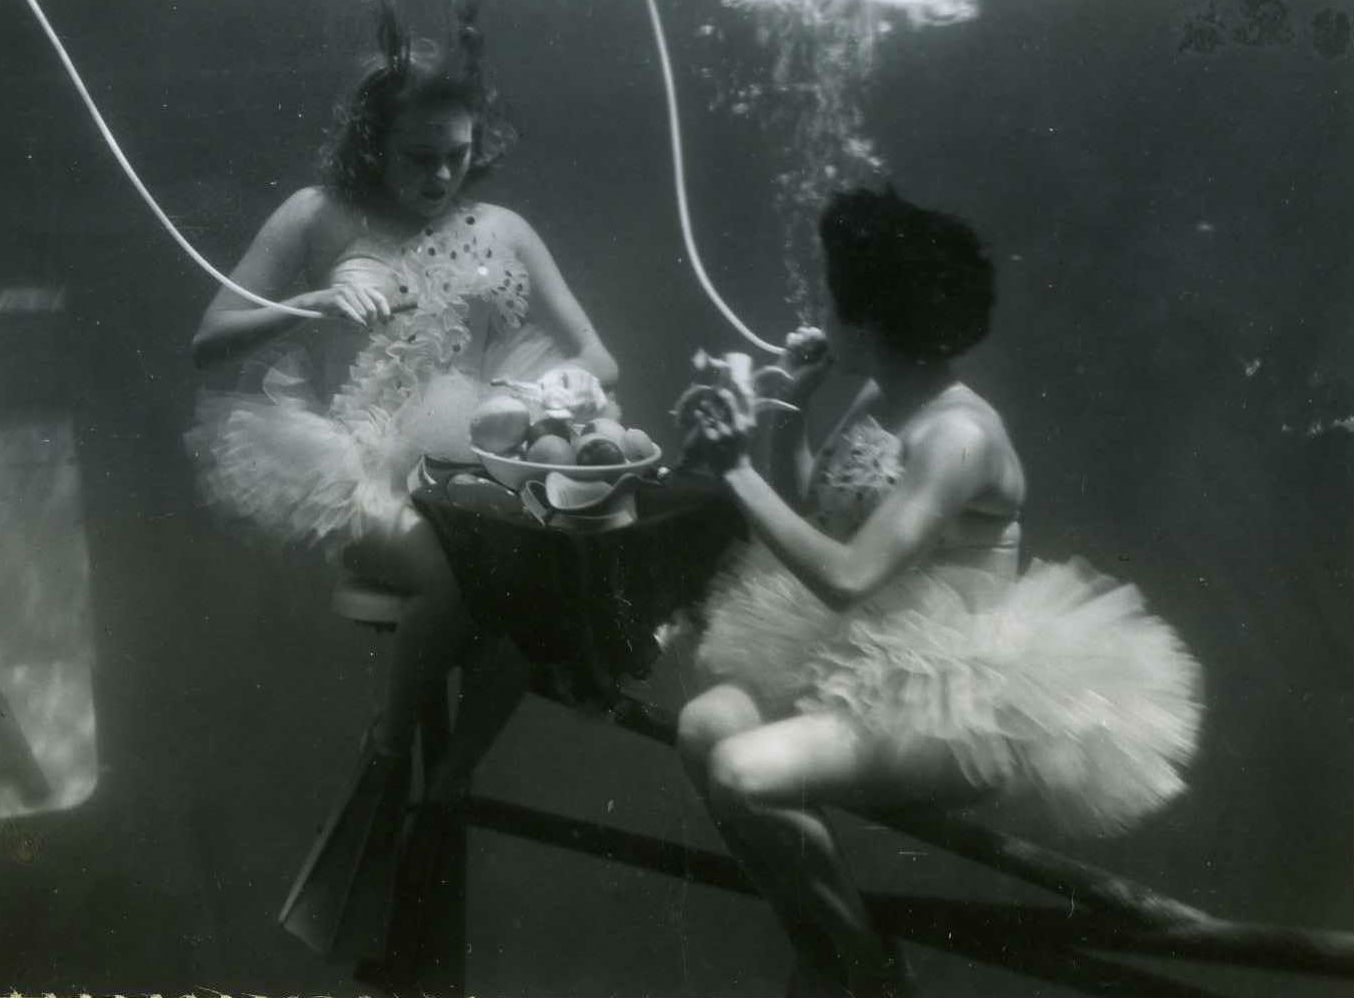 vintage aquamaids eating and drinking underwater at aquarena springs in san marcos texas.jpg